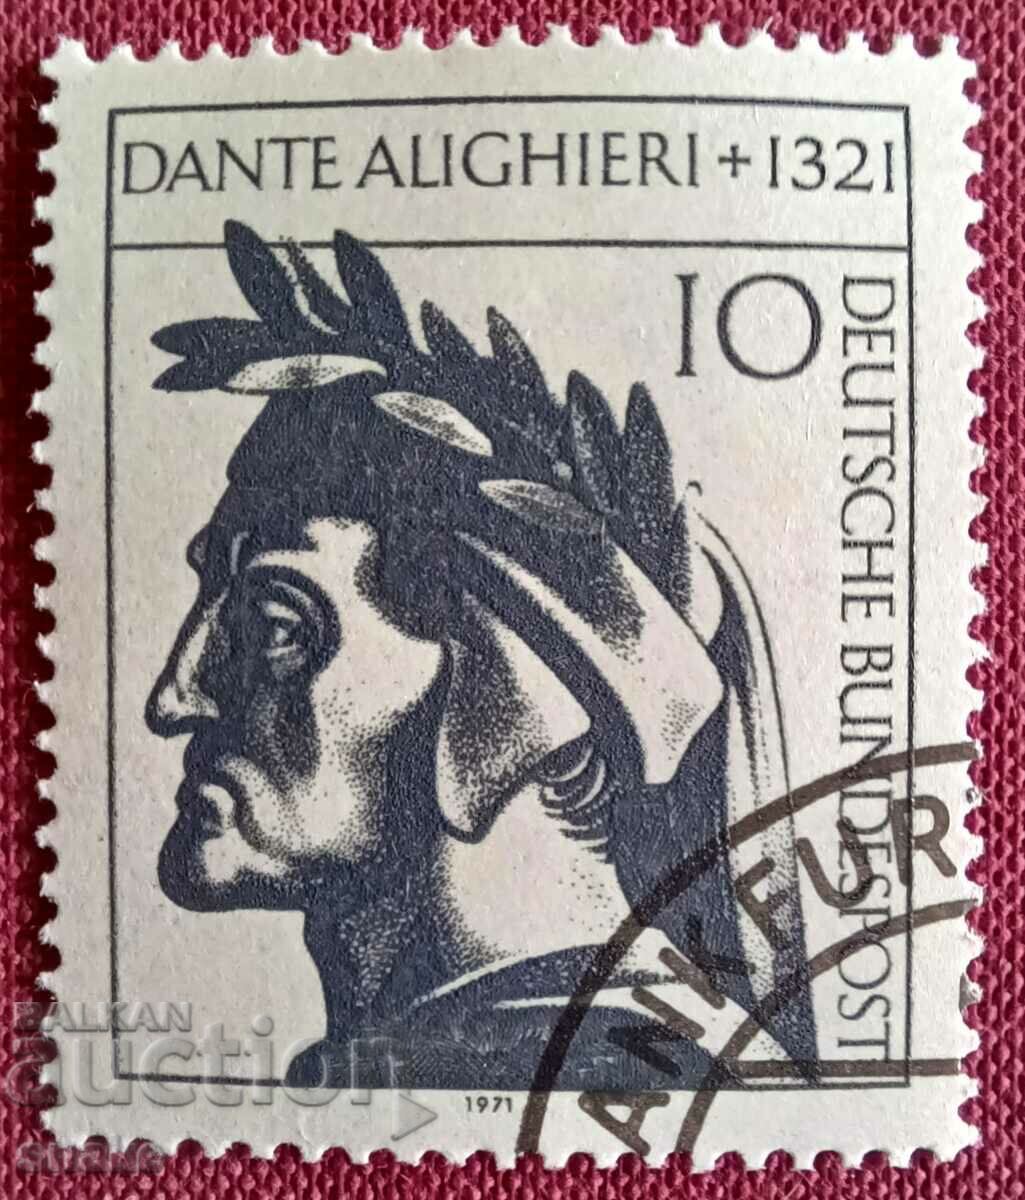 Germania 1971 Dante Alleghieri